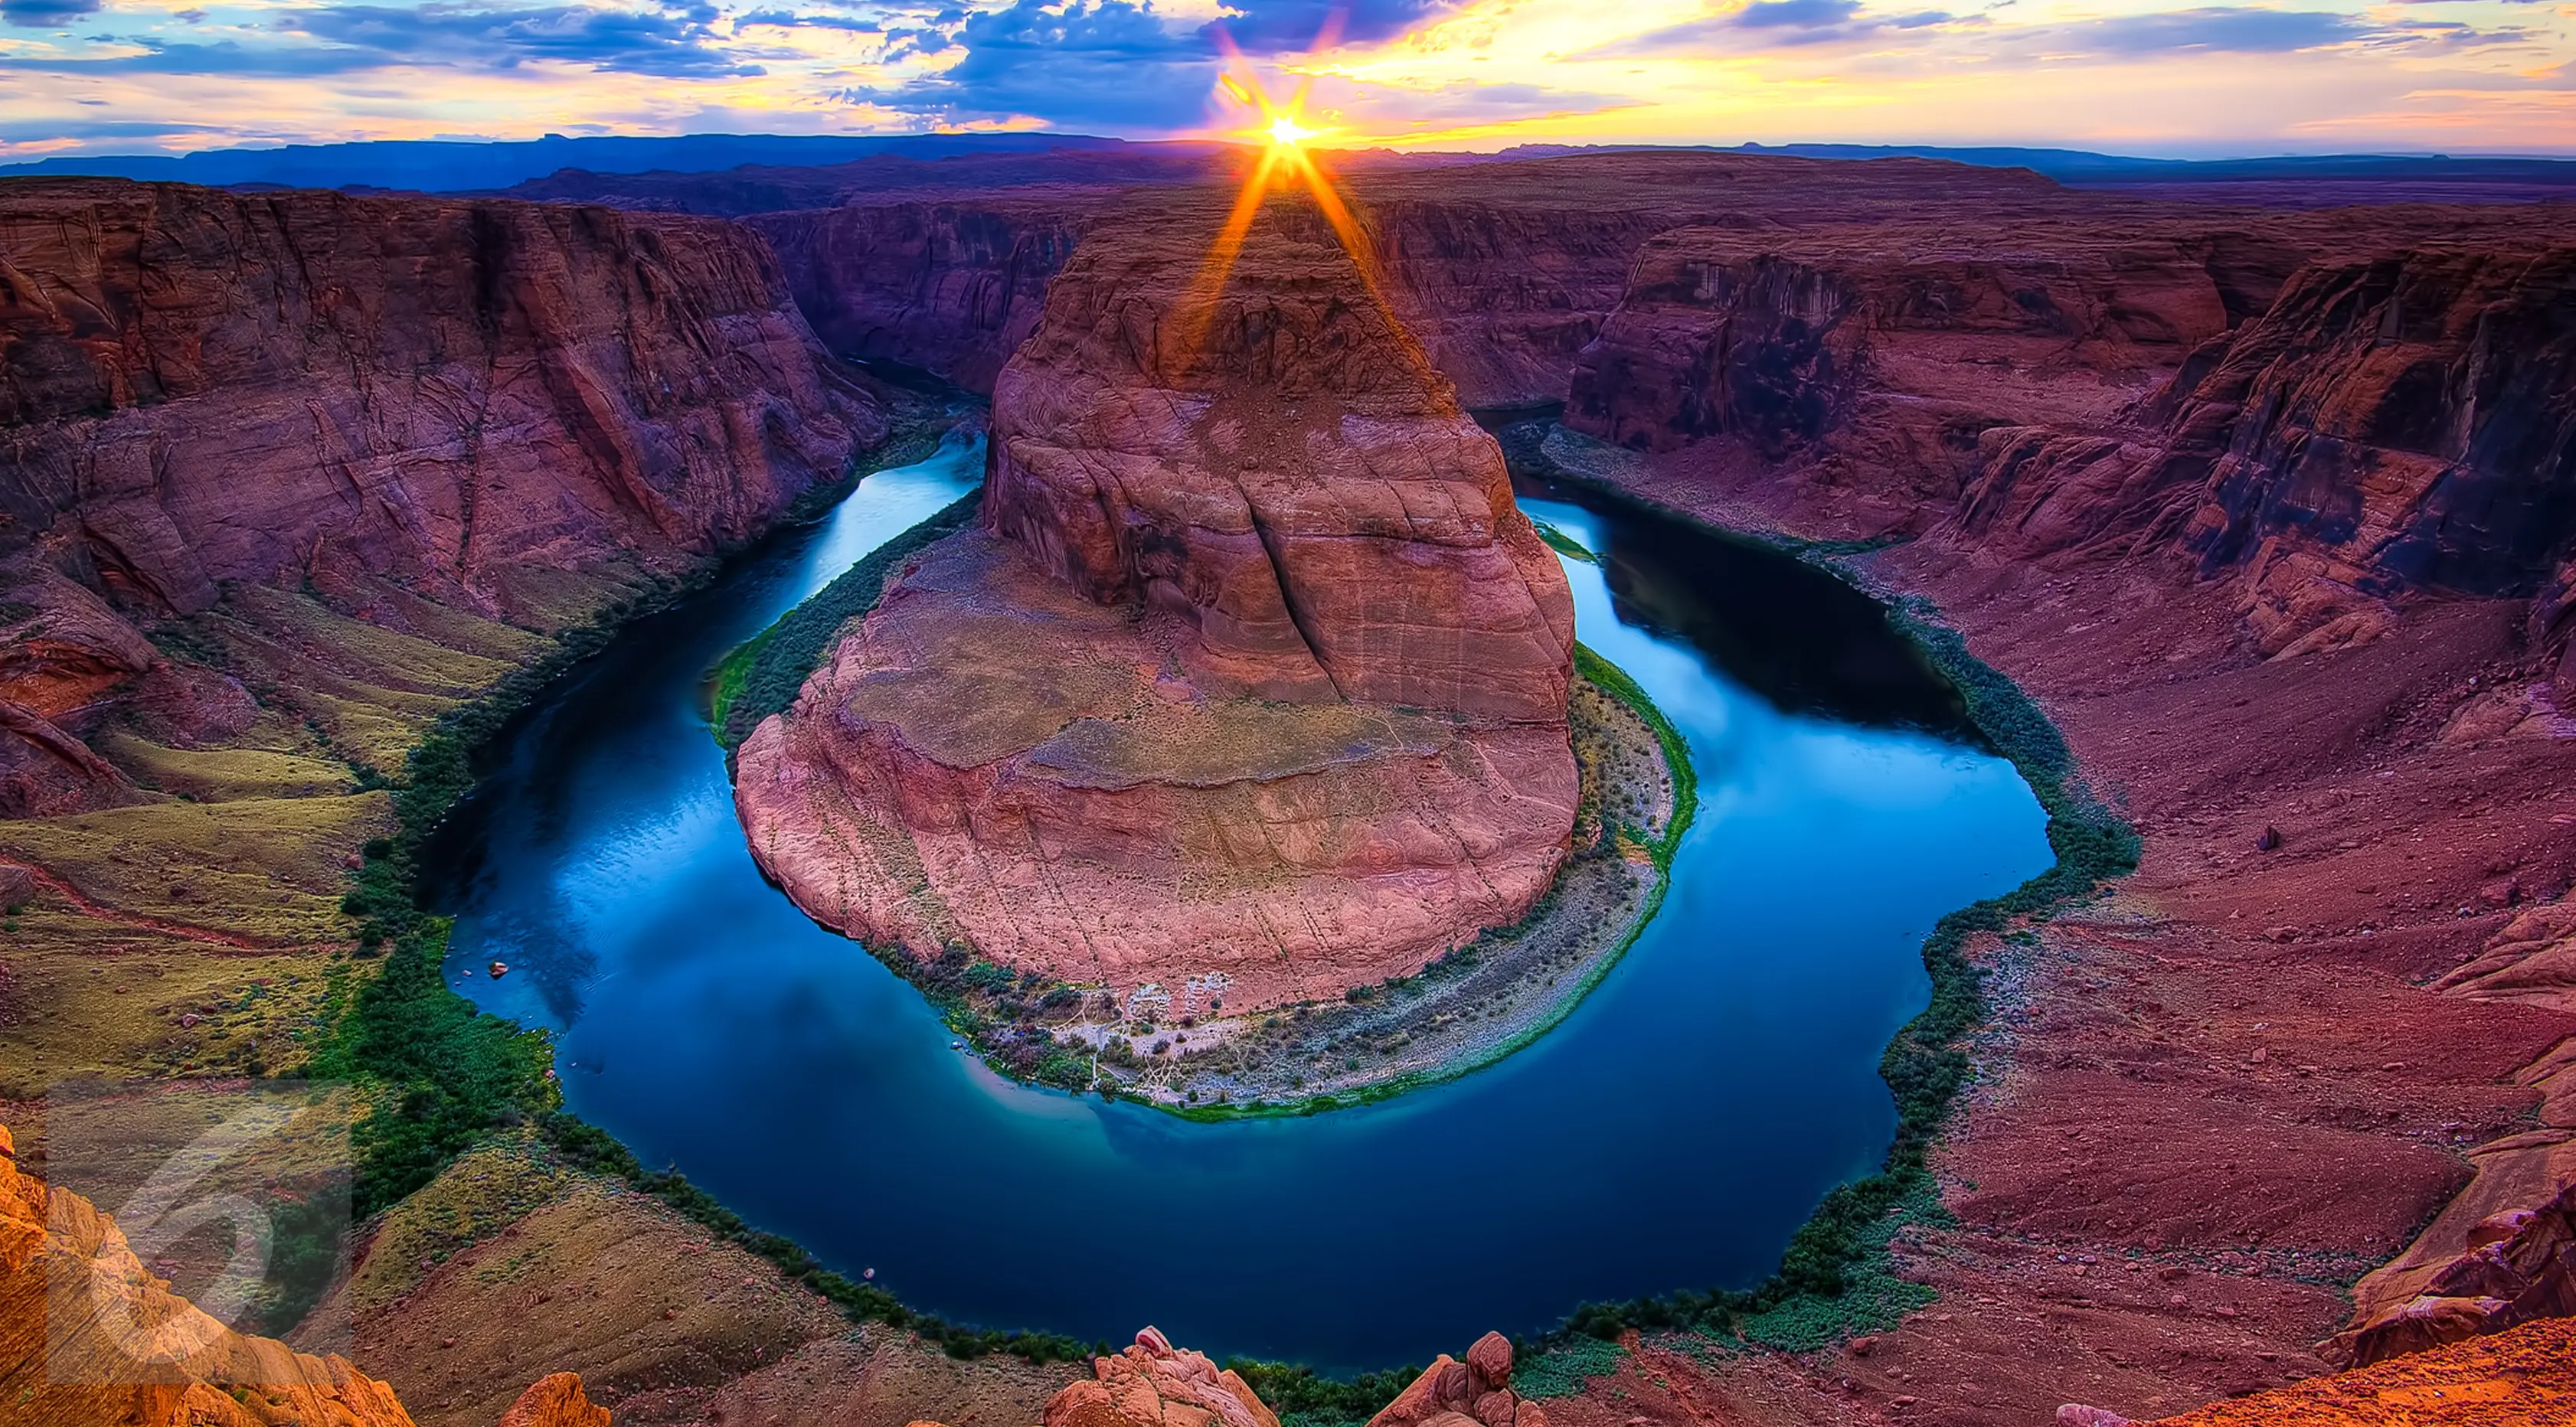 Taman Nasional Grand Canyon (iStockphoto)